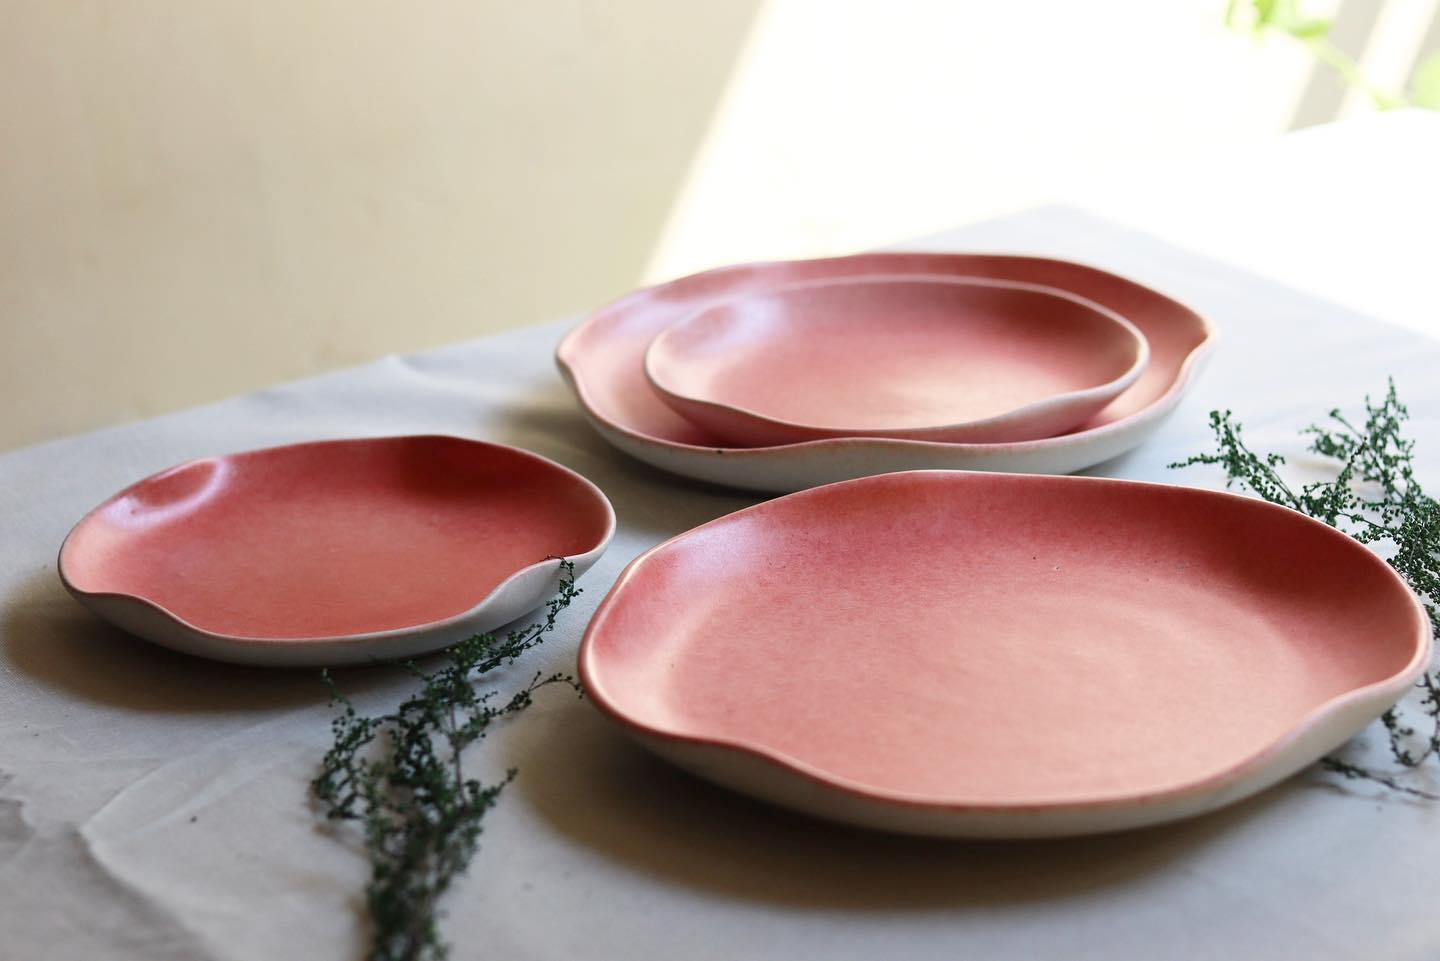 Handmade ceramic plates